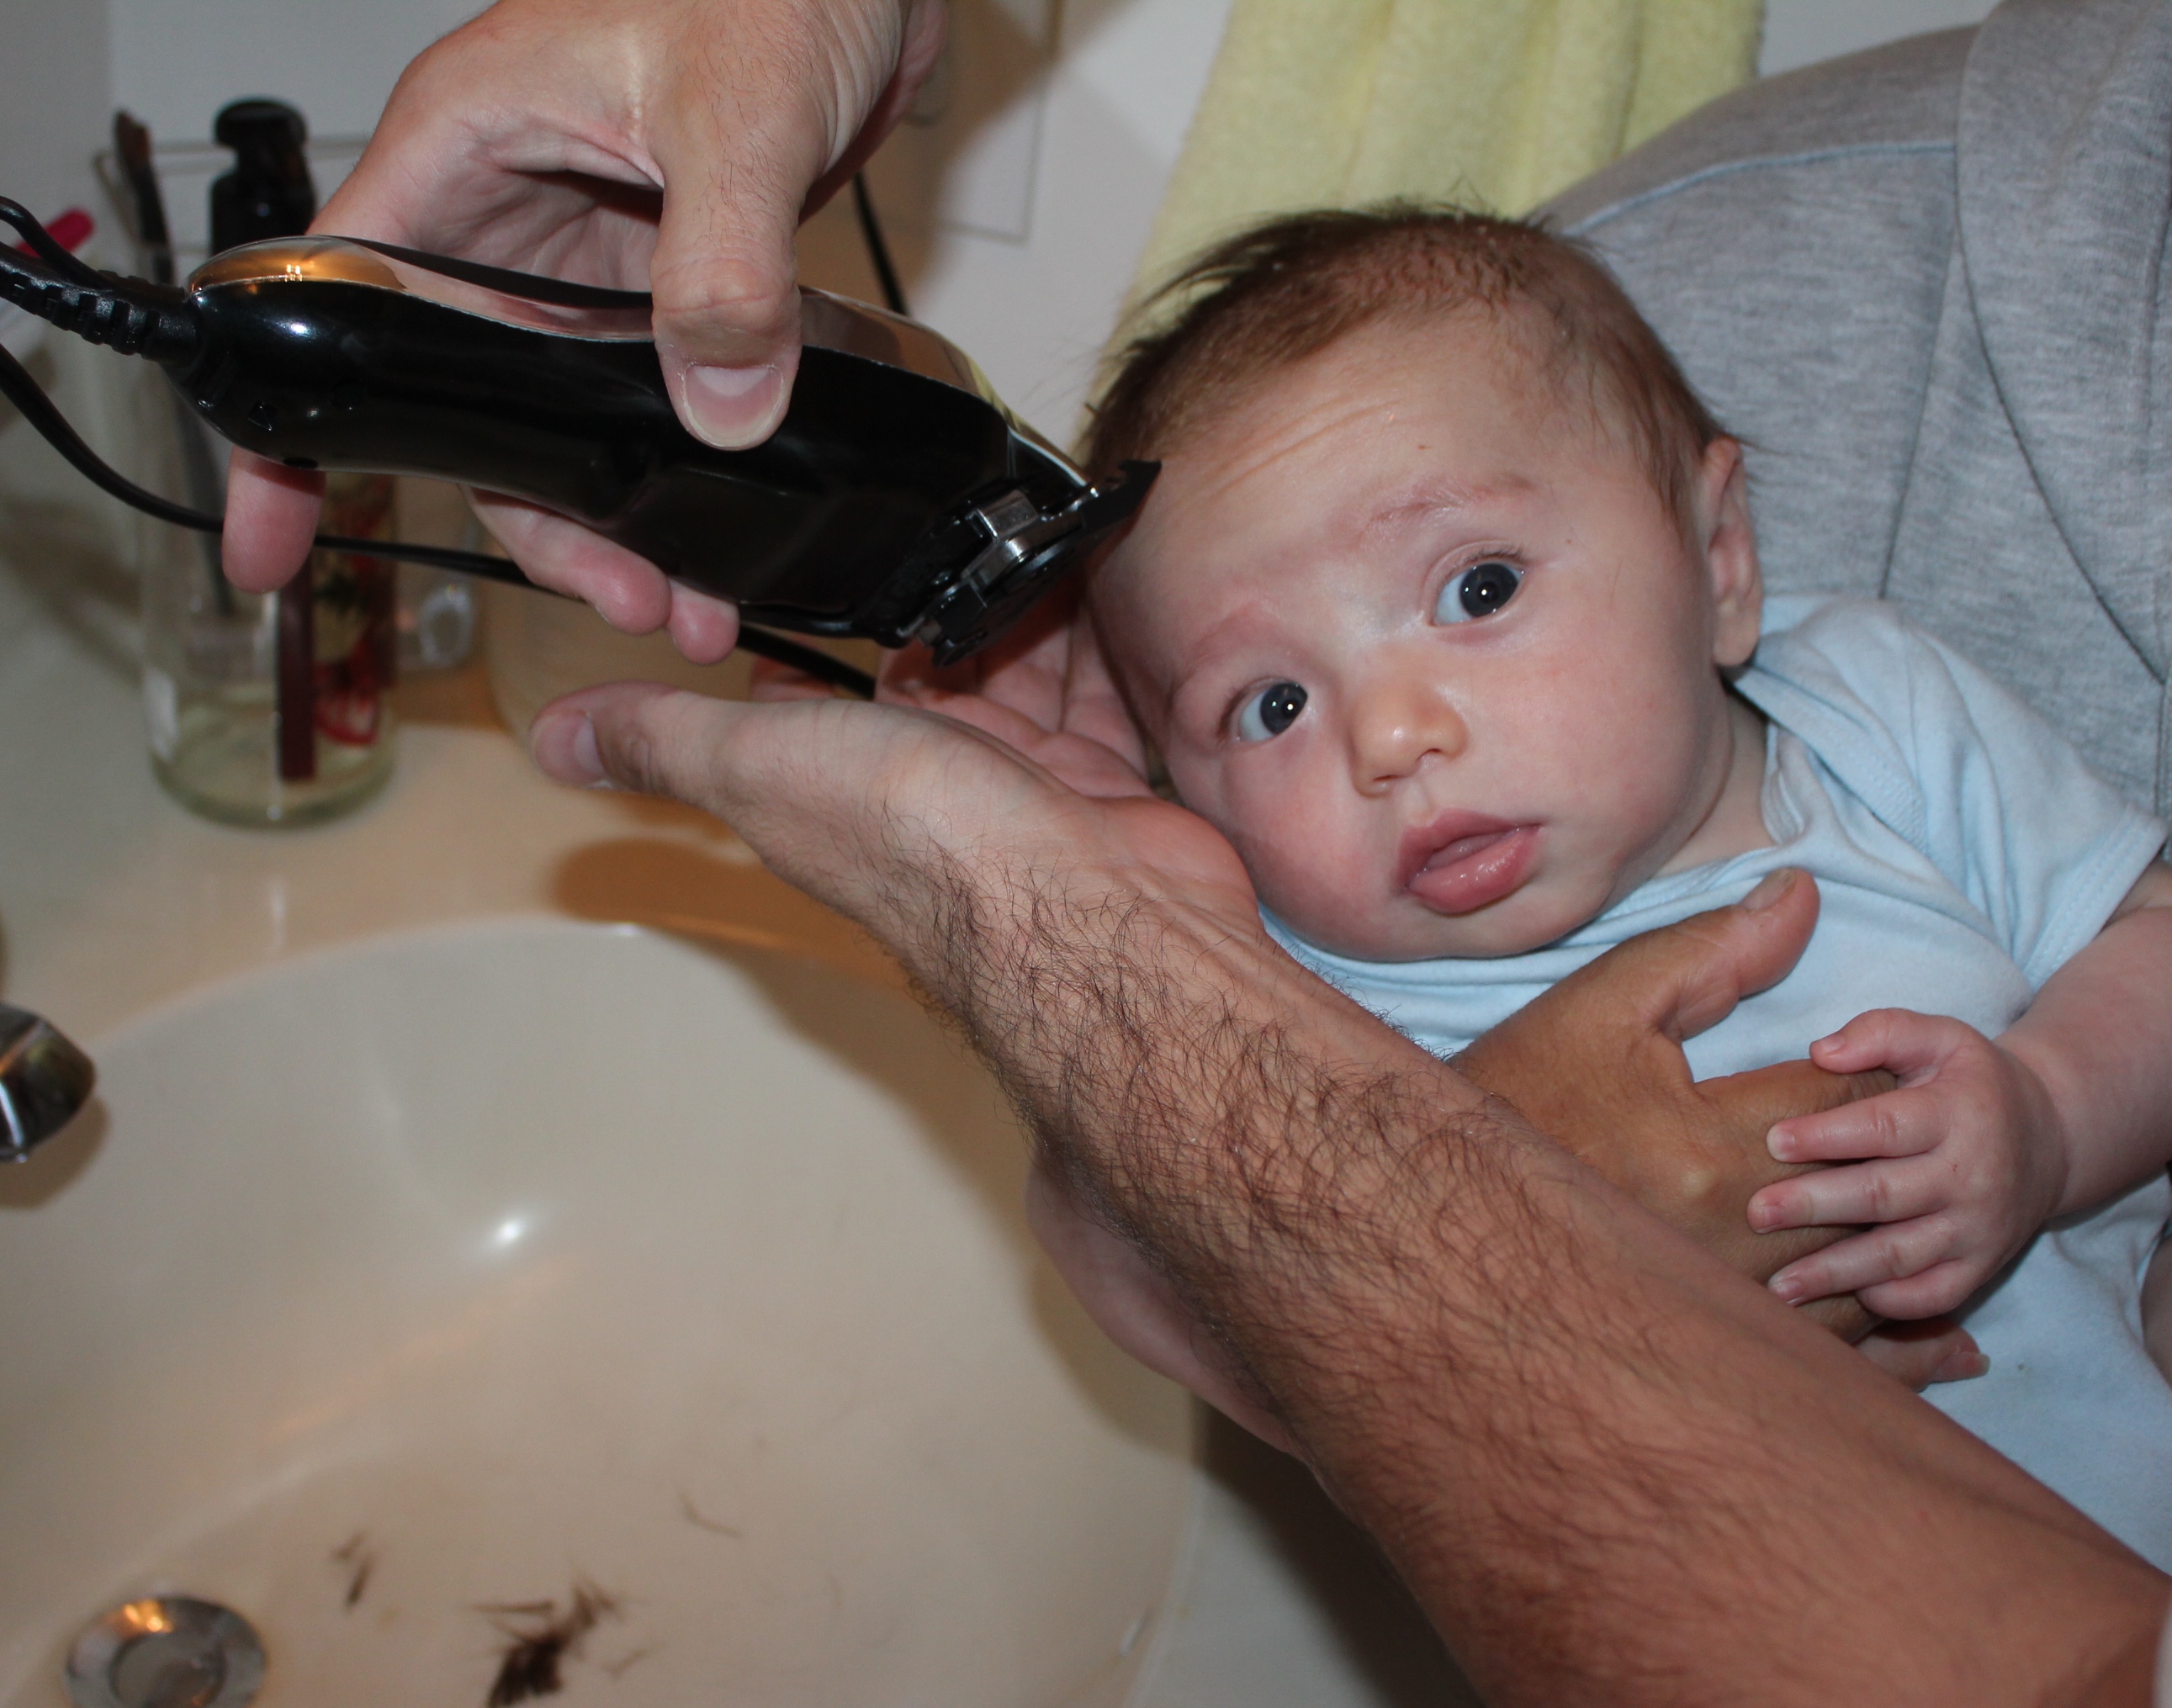 Shaving The Hair Of A Newborn Necessary